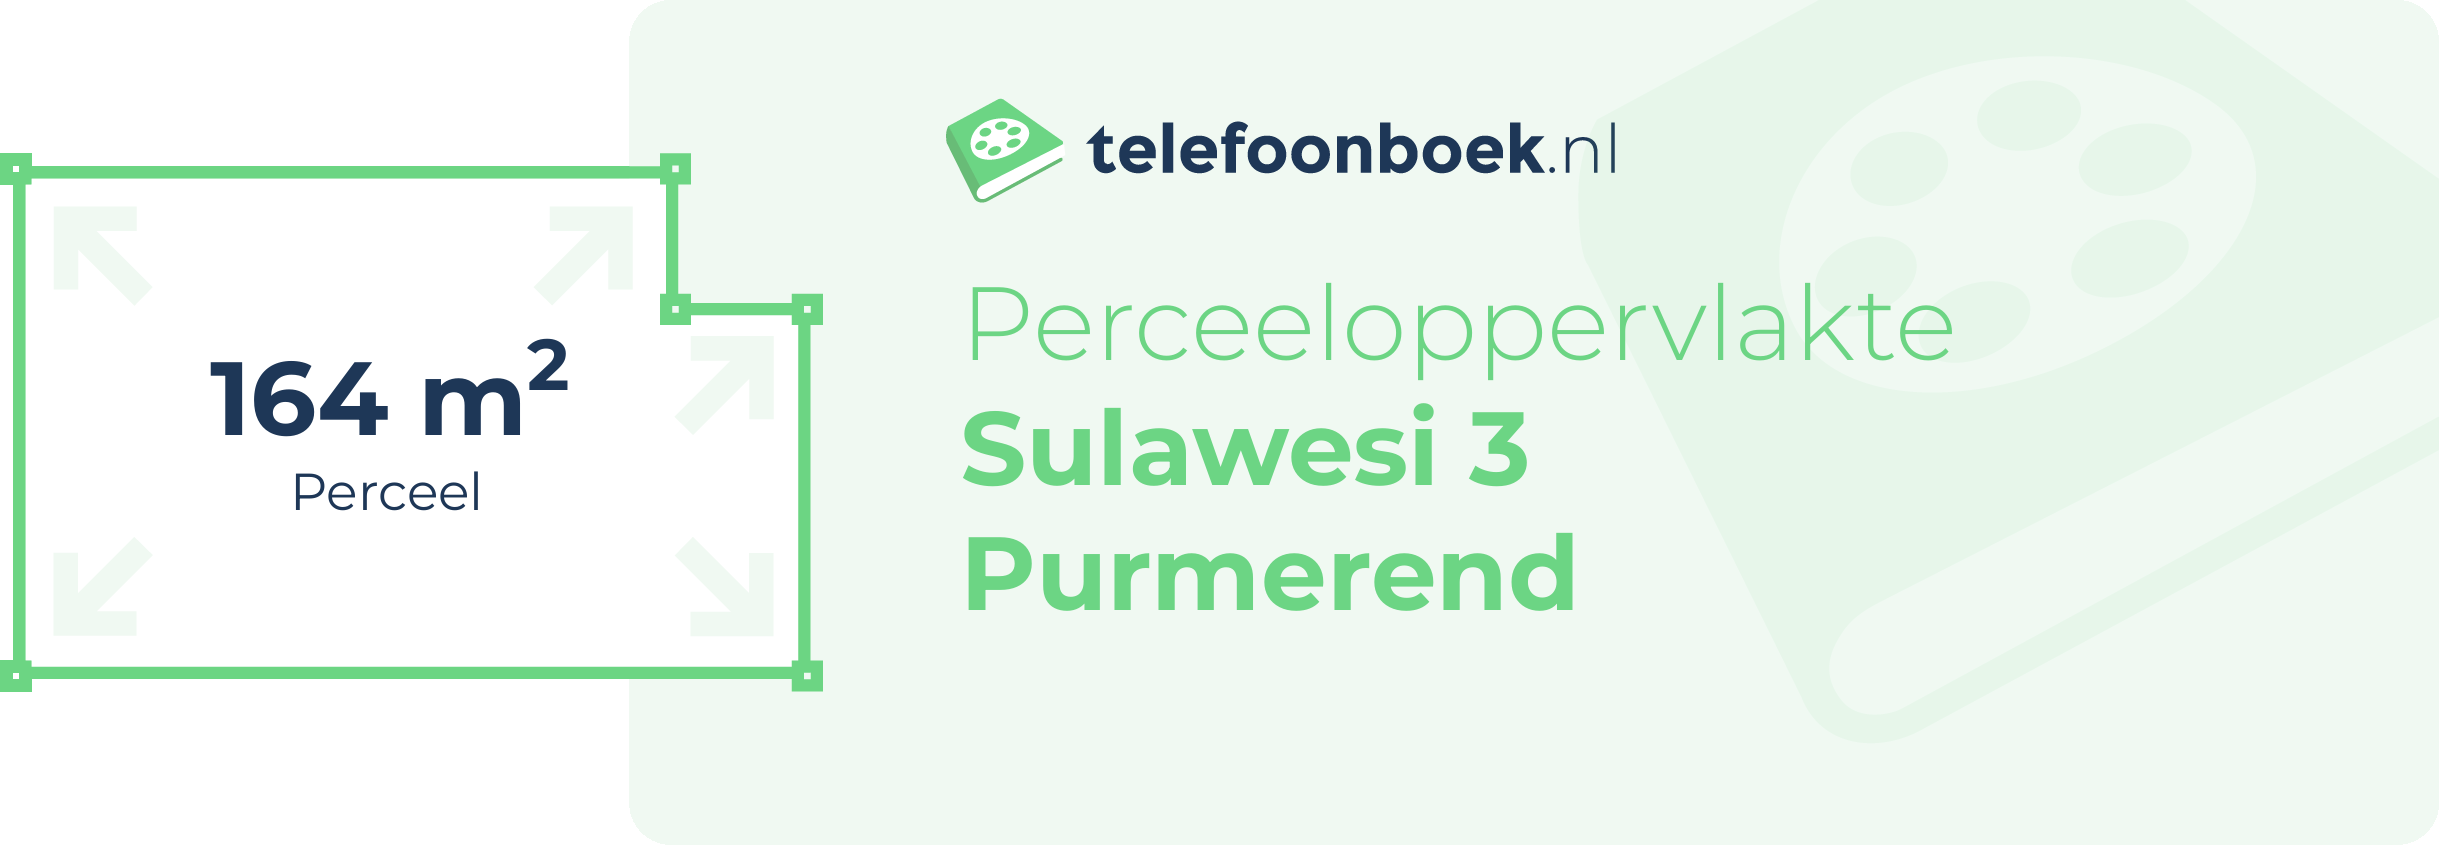 Perceeloppervlakte Sulawesi 3 Purmerend